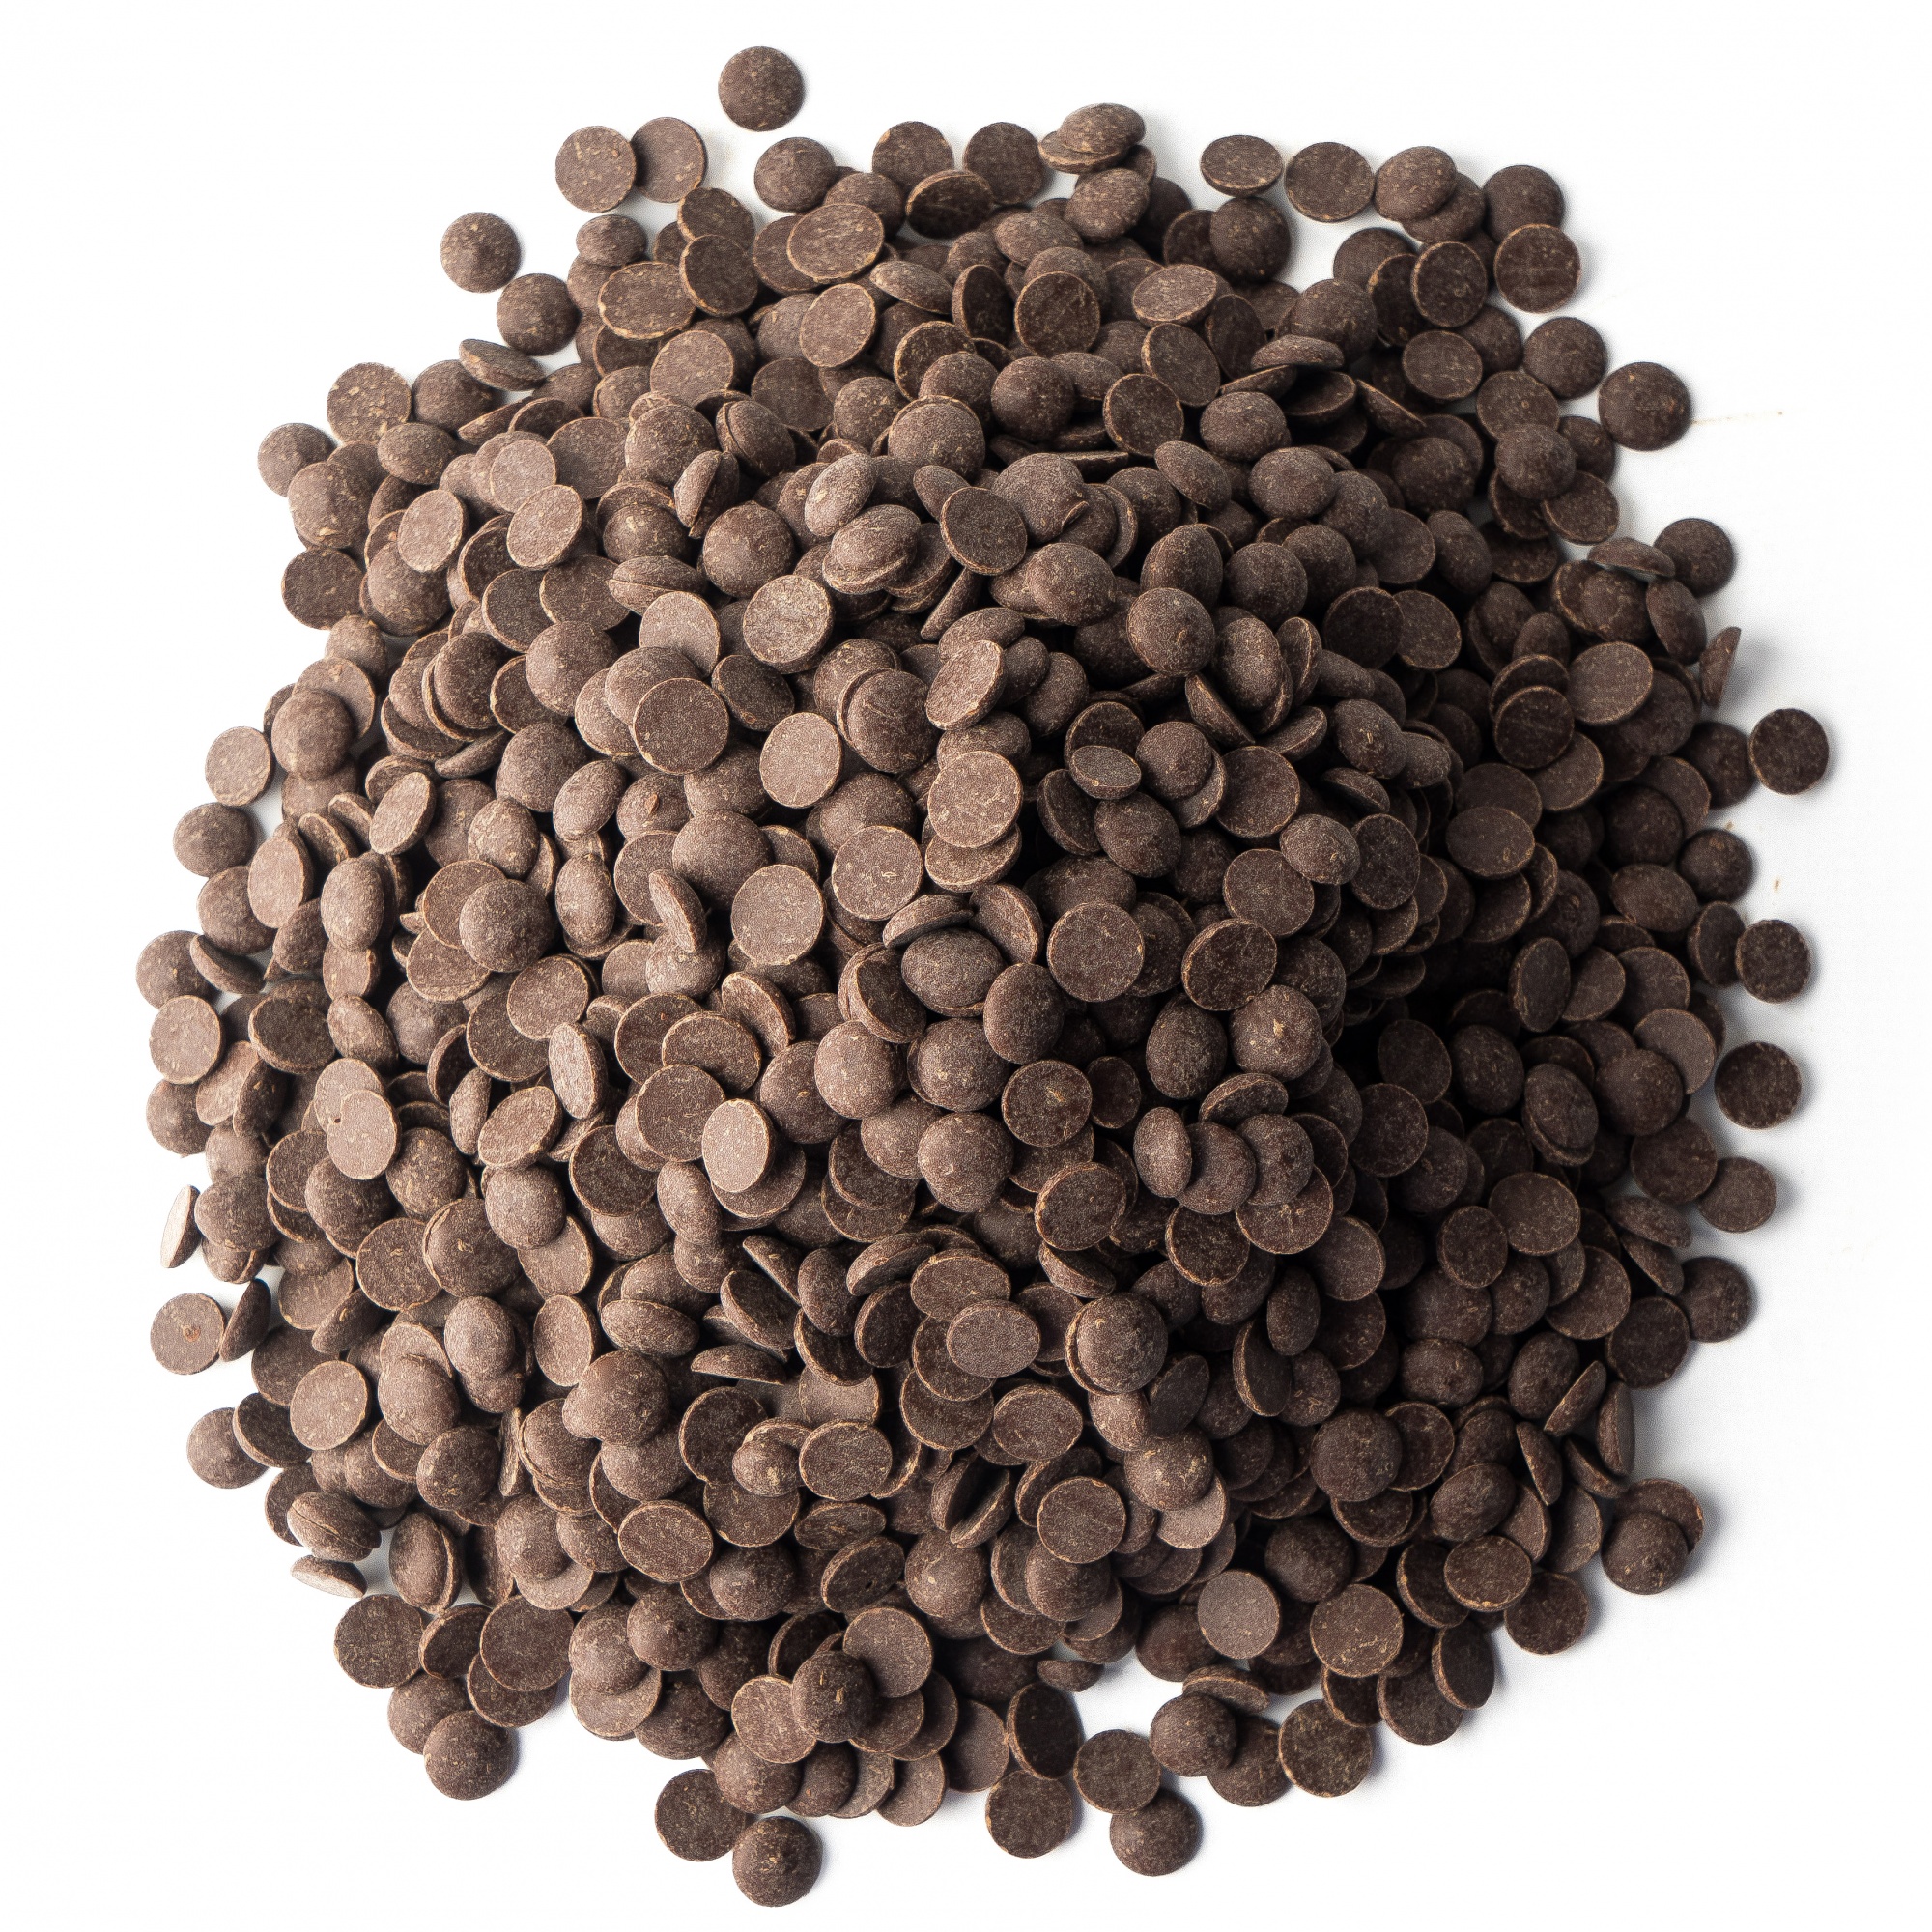 Шоколад тёмный 53,9% без сахара, Callebaut, Бельгия, 1 кг  | Фото — Магазин Andy Chef  1